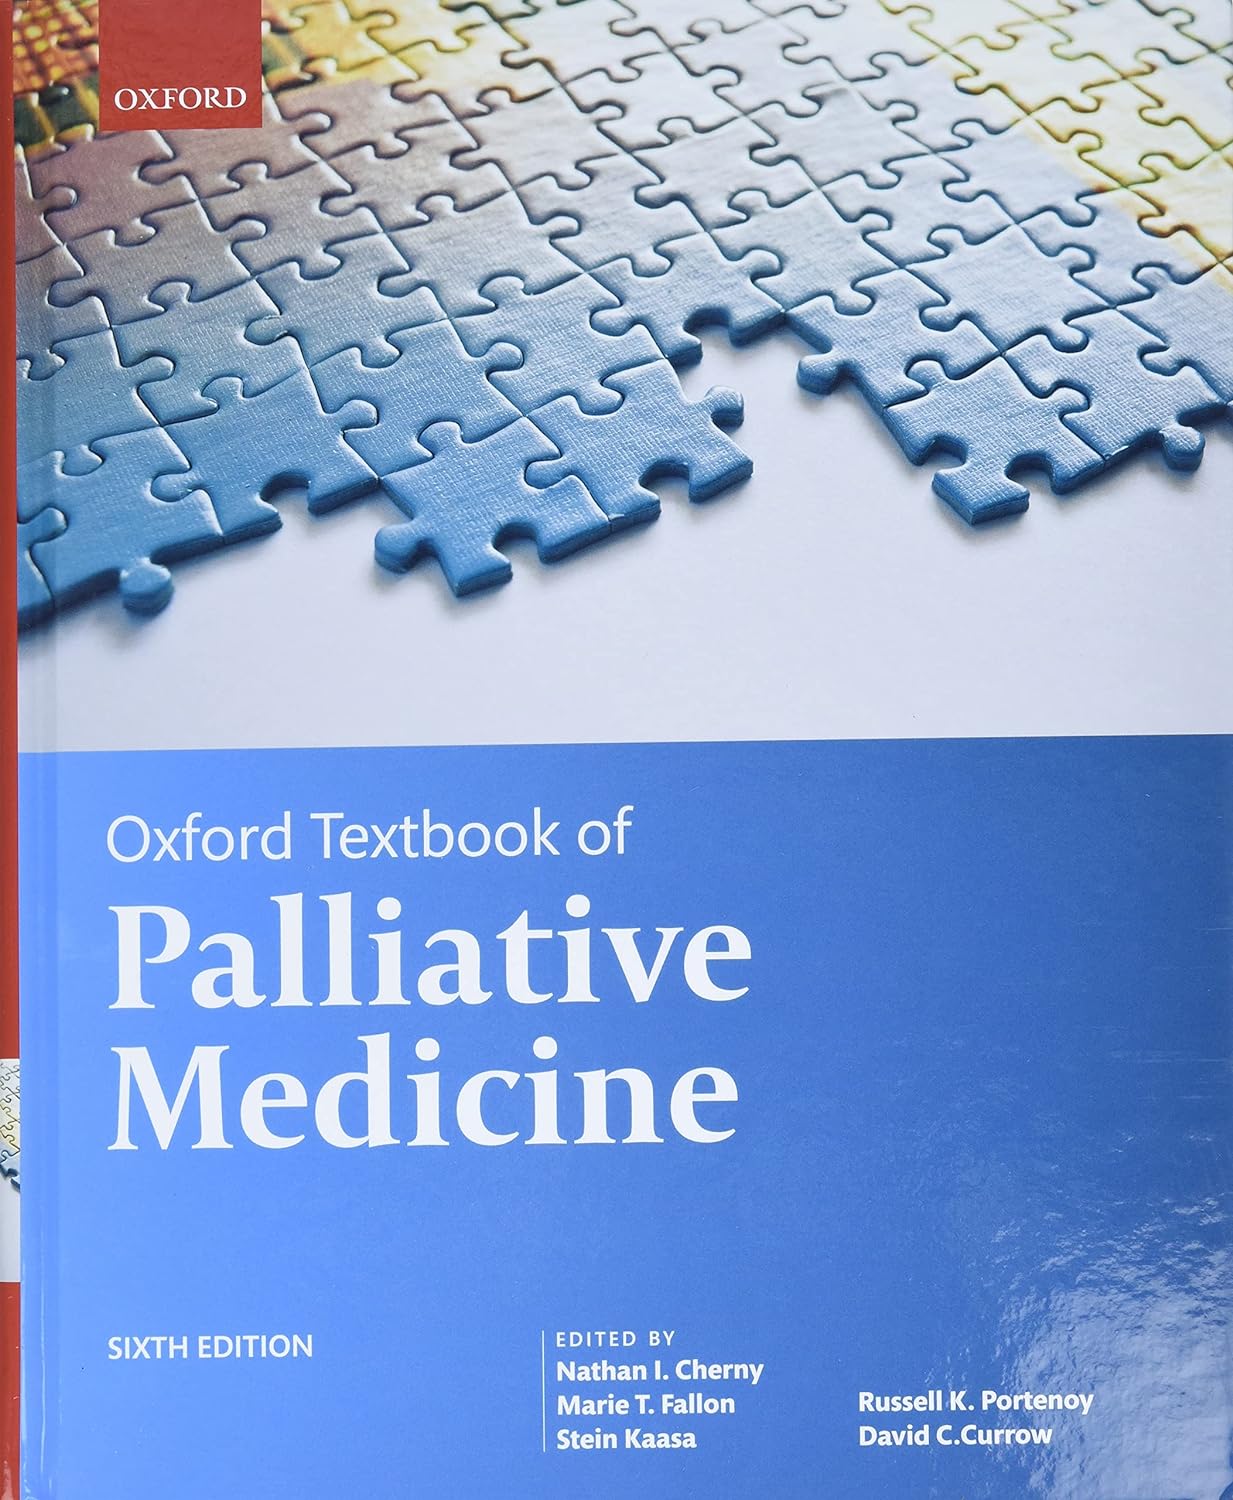 E-Textbook Oxford Textbook of Palliative Medicine 6th Edition Nathan I. Cherny